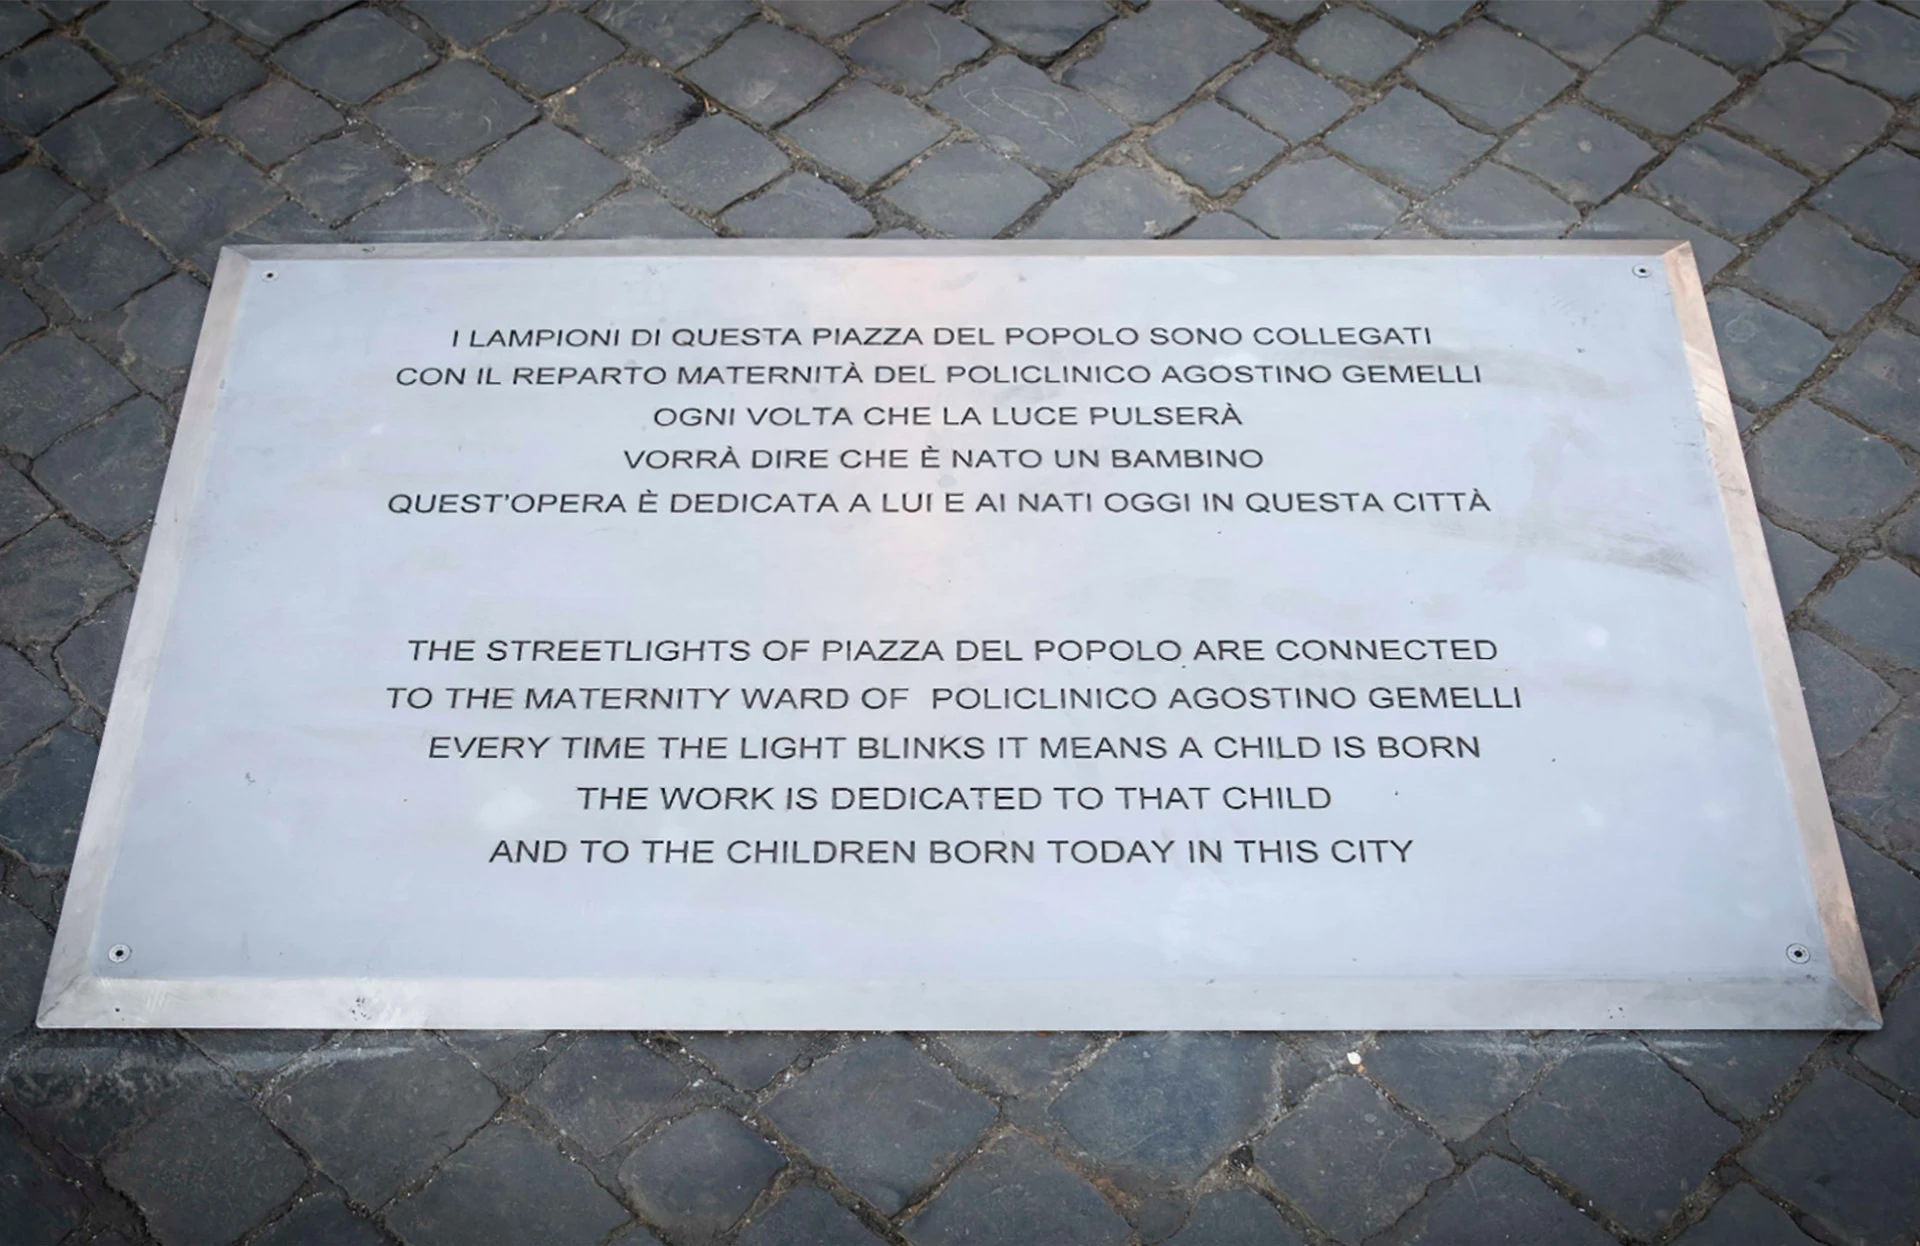 The plaque that explains the Acea project “Ai nati oggi”